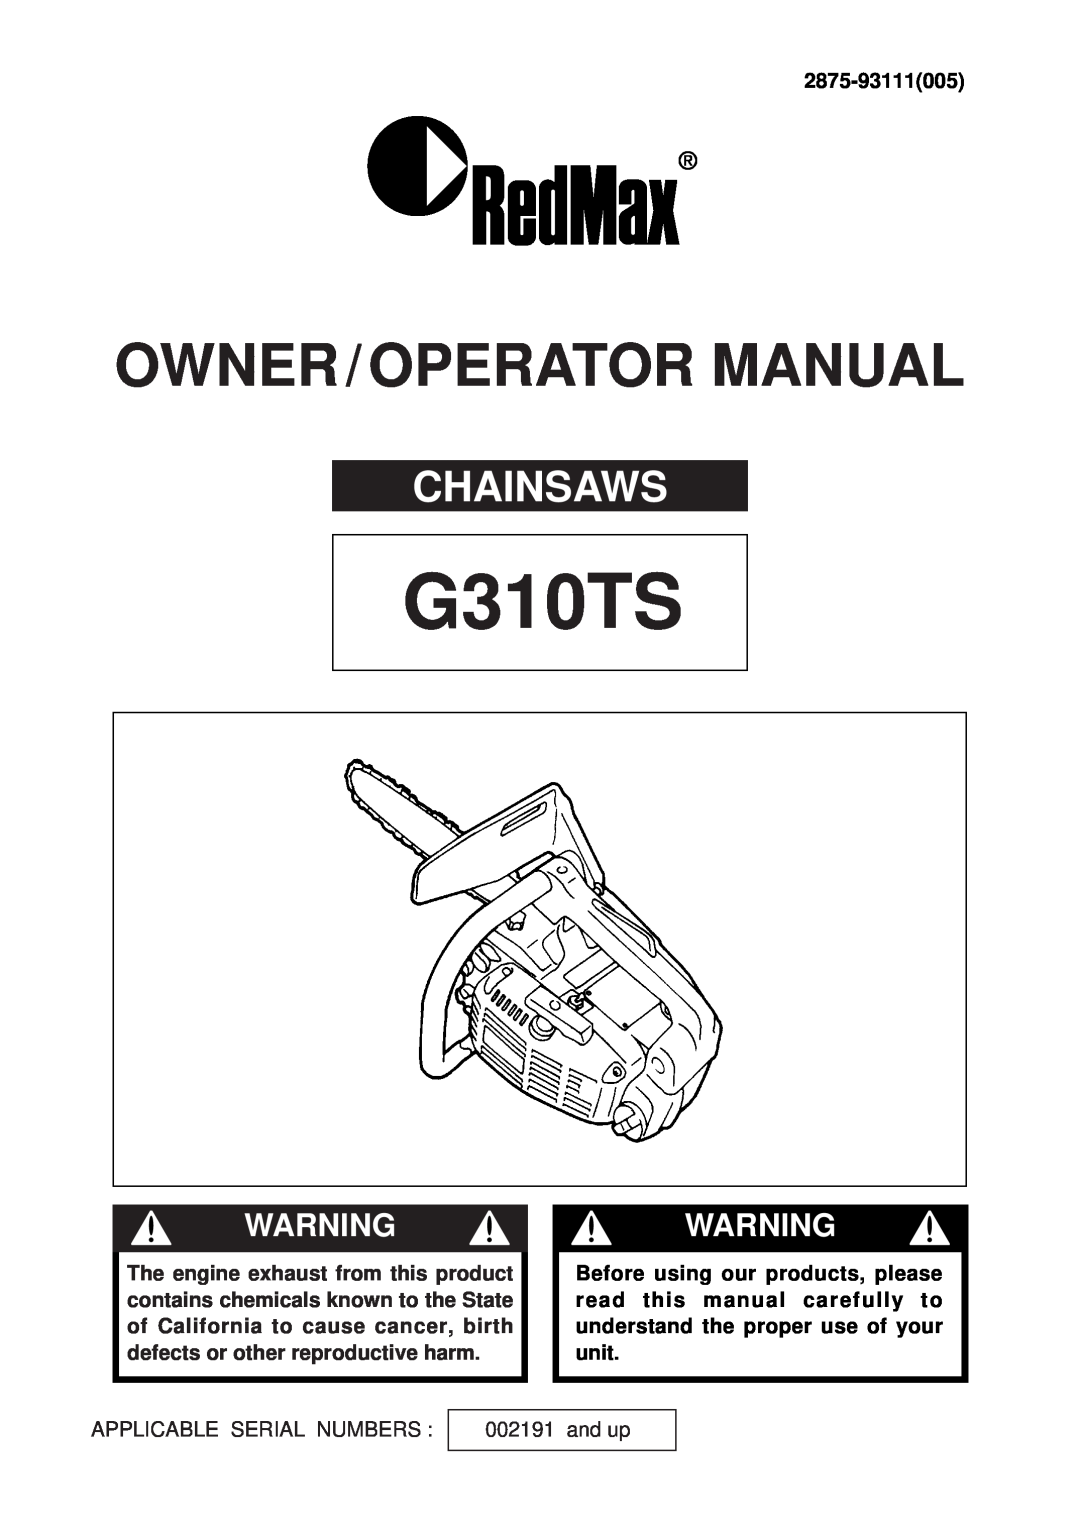 Zenoah G300TS manual G310TS, Chainsaws, 2875-93111005, Owner / Operator Manual 